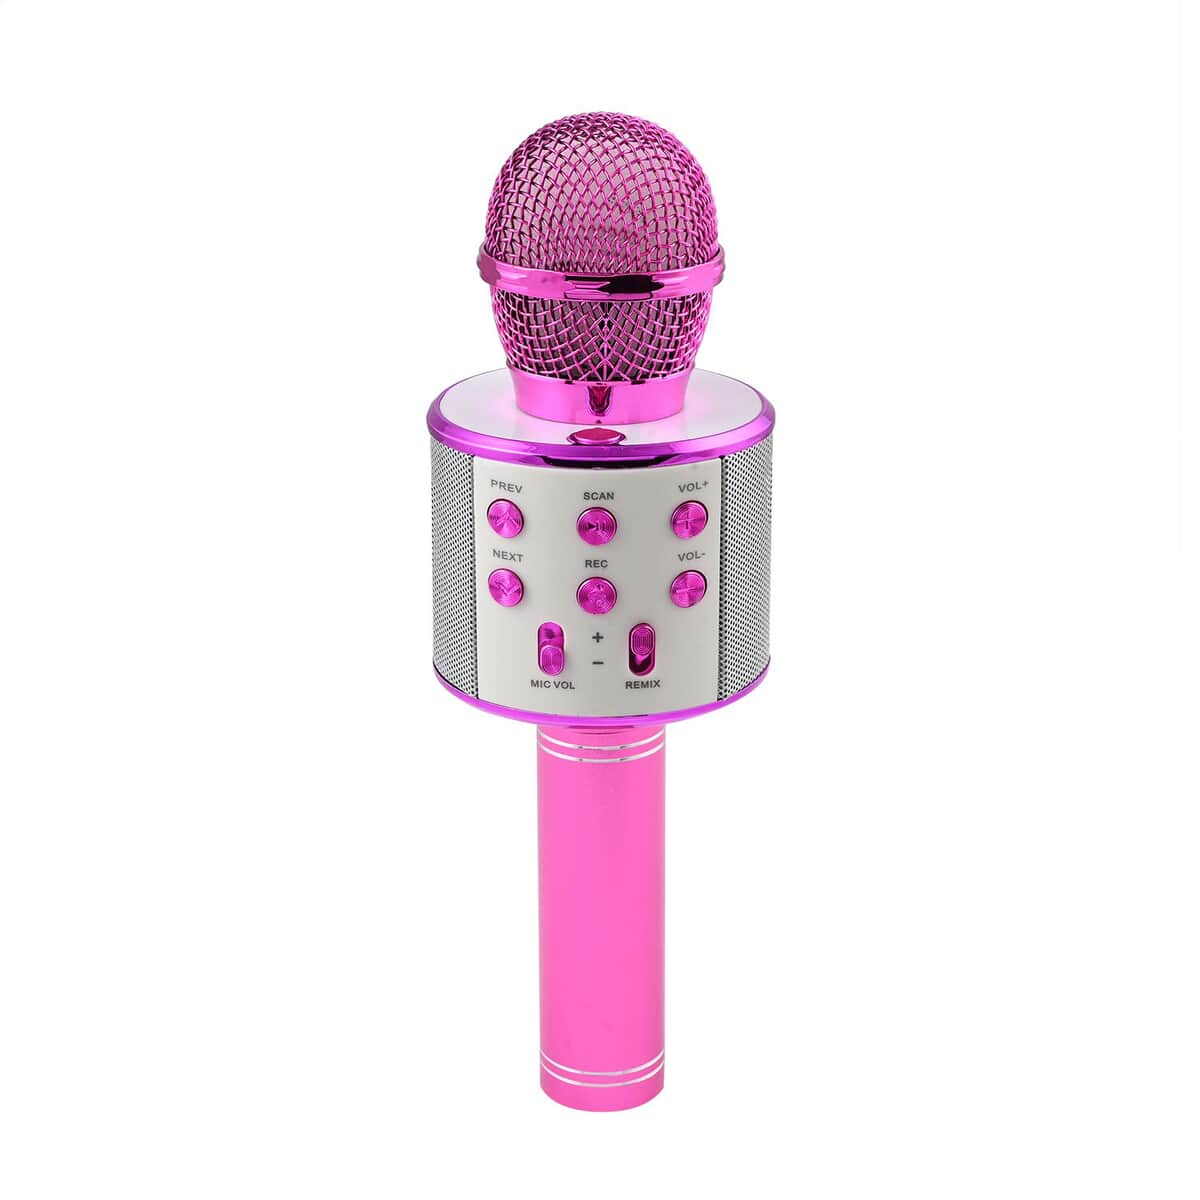 Sing Your Heart Out: Karaoke Microphones Best Buy